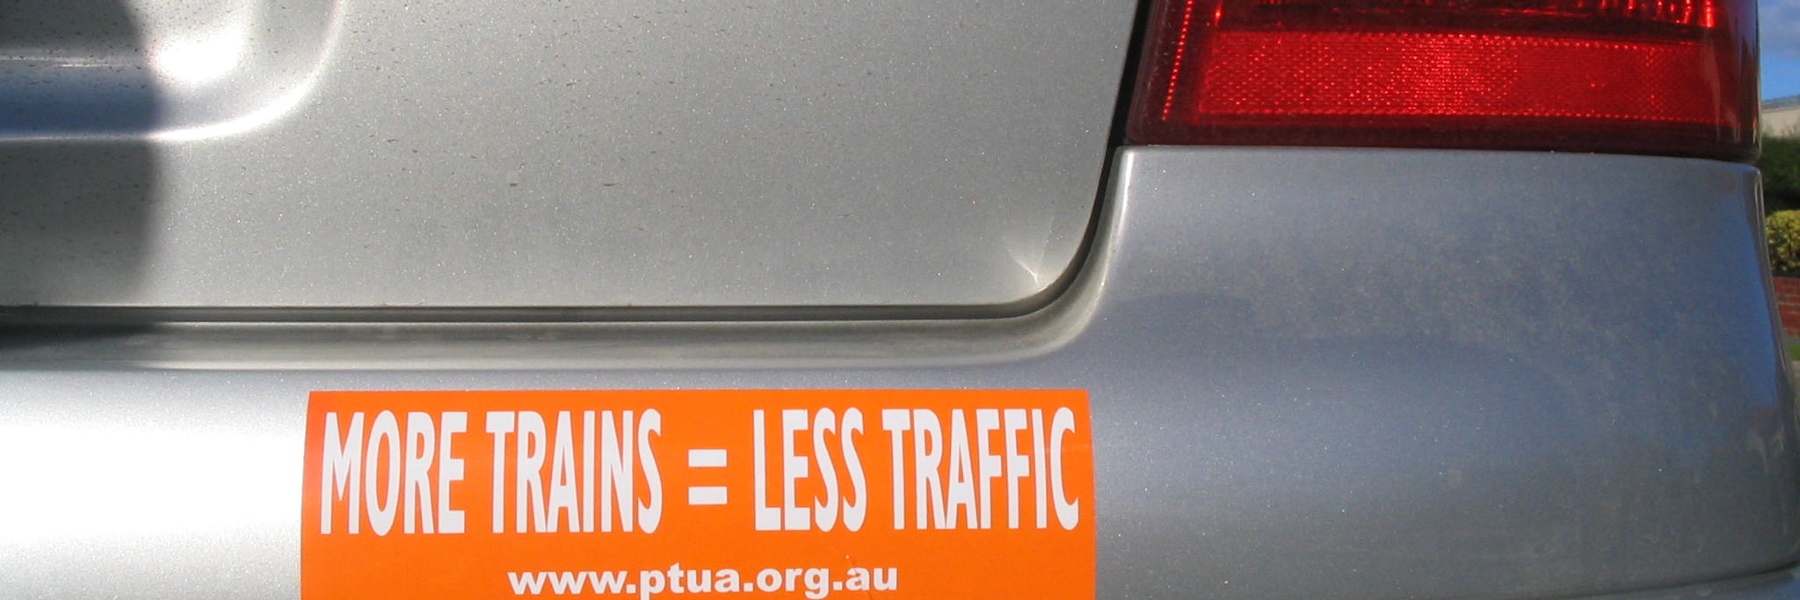 PTUA sticker on car